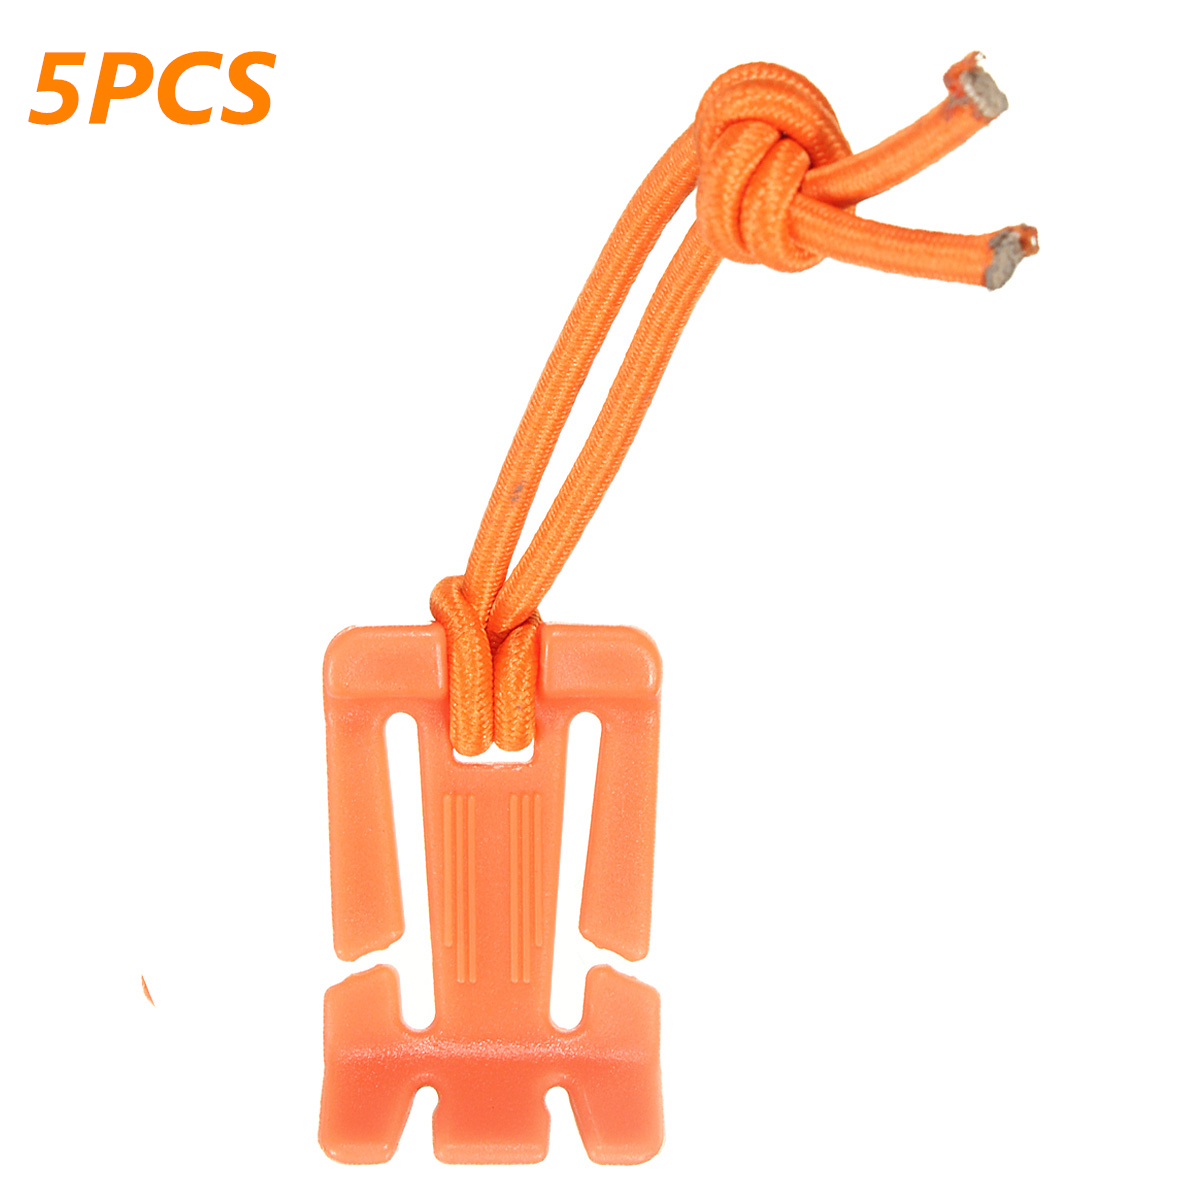 5pcs-Military-Dominator-Elastic-Cord-Hang-Buckle-Clip-Pals-Molle-Style-Webbing-Orange-1631977-1